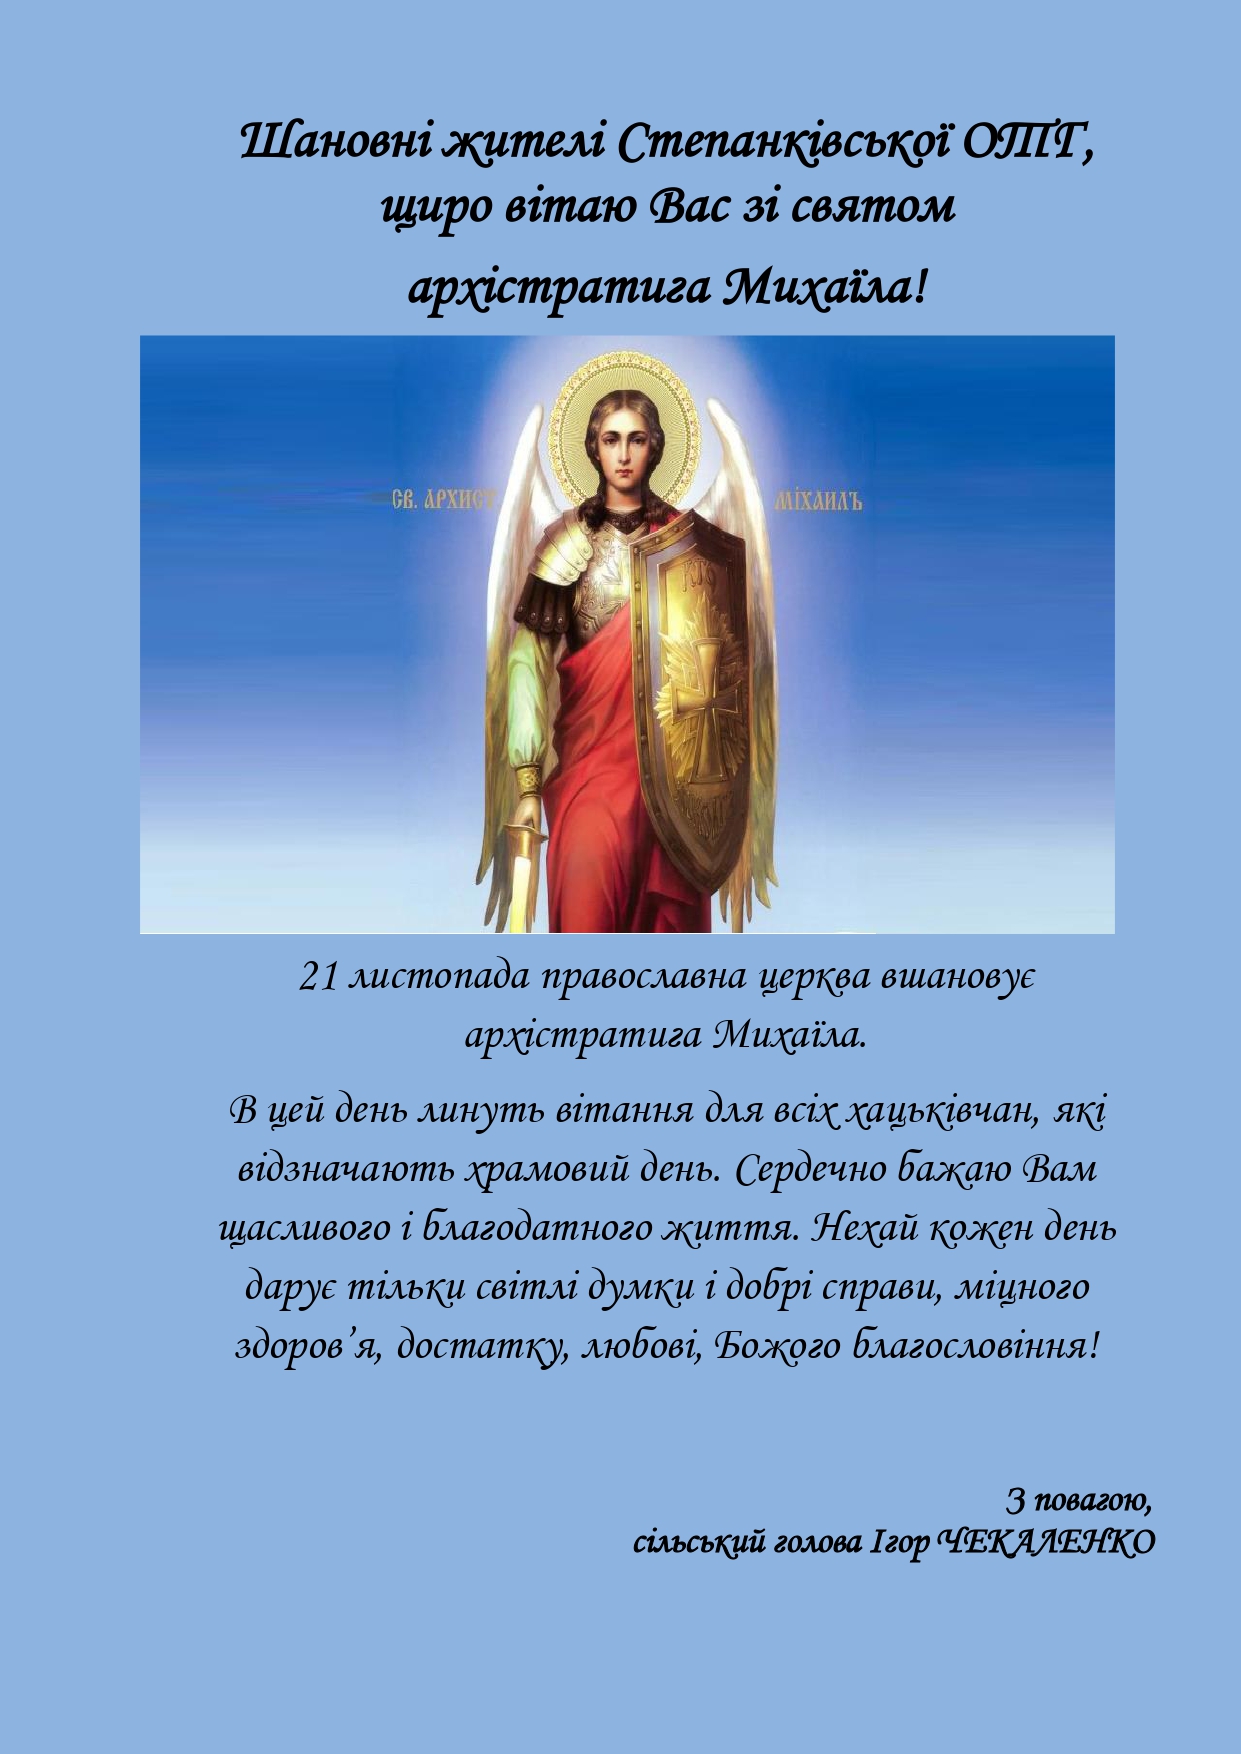 Зі святом святого Архистратига Михайла Page 0001